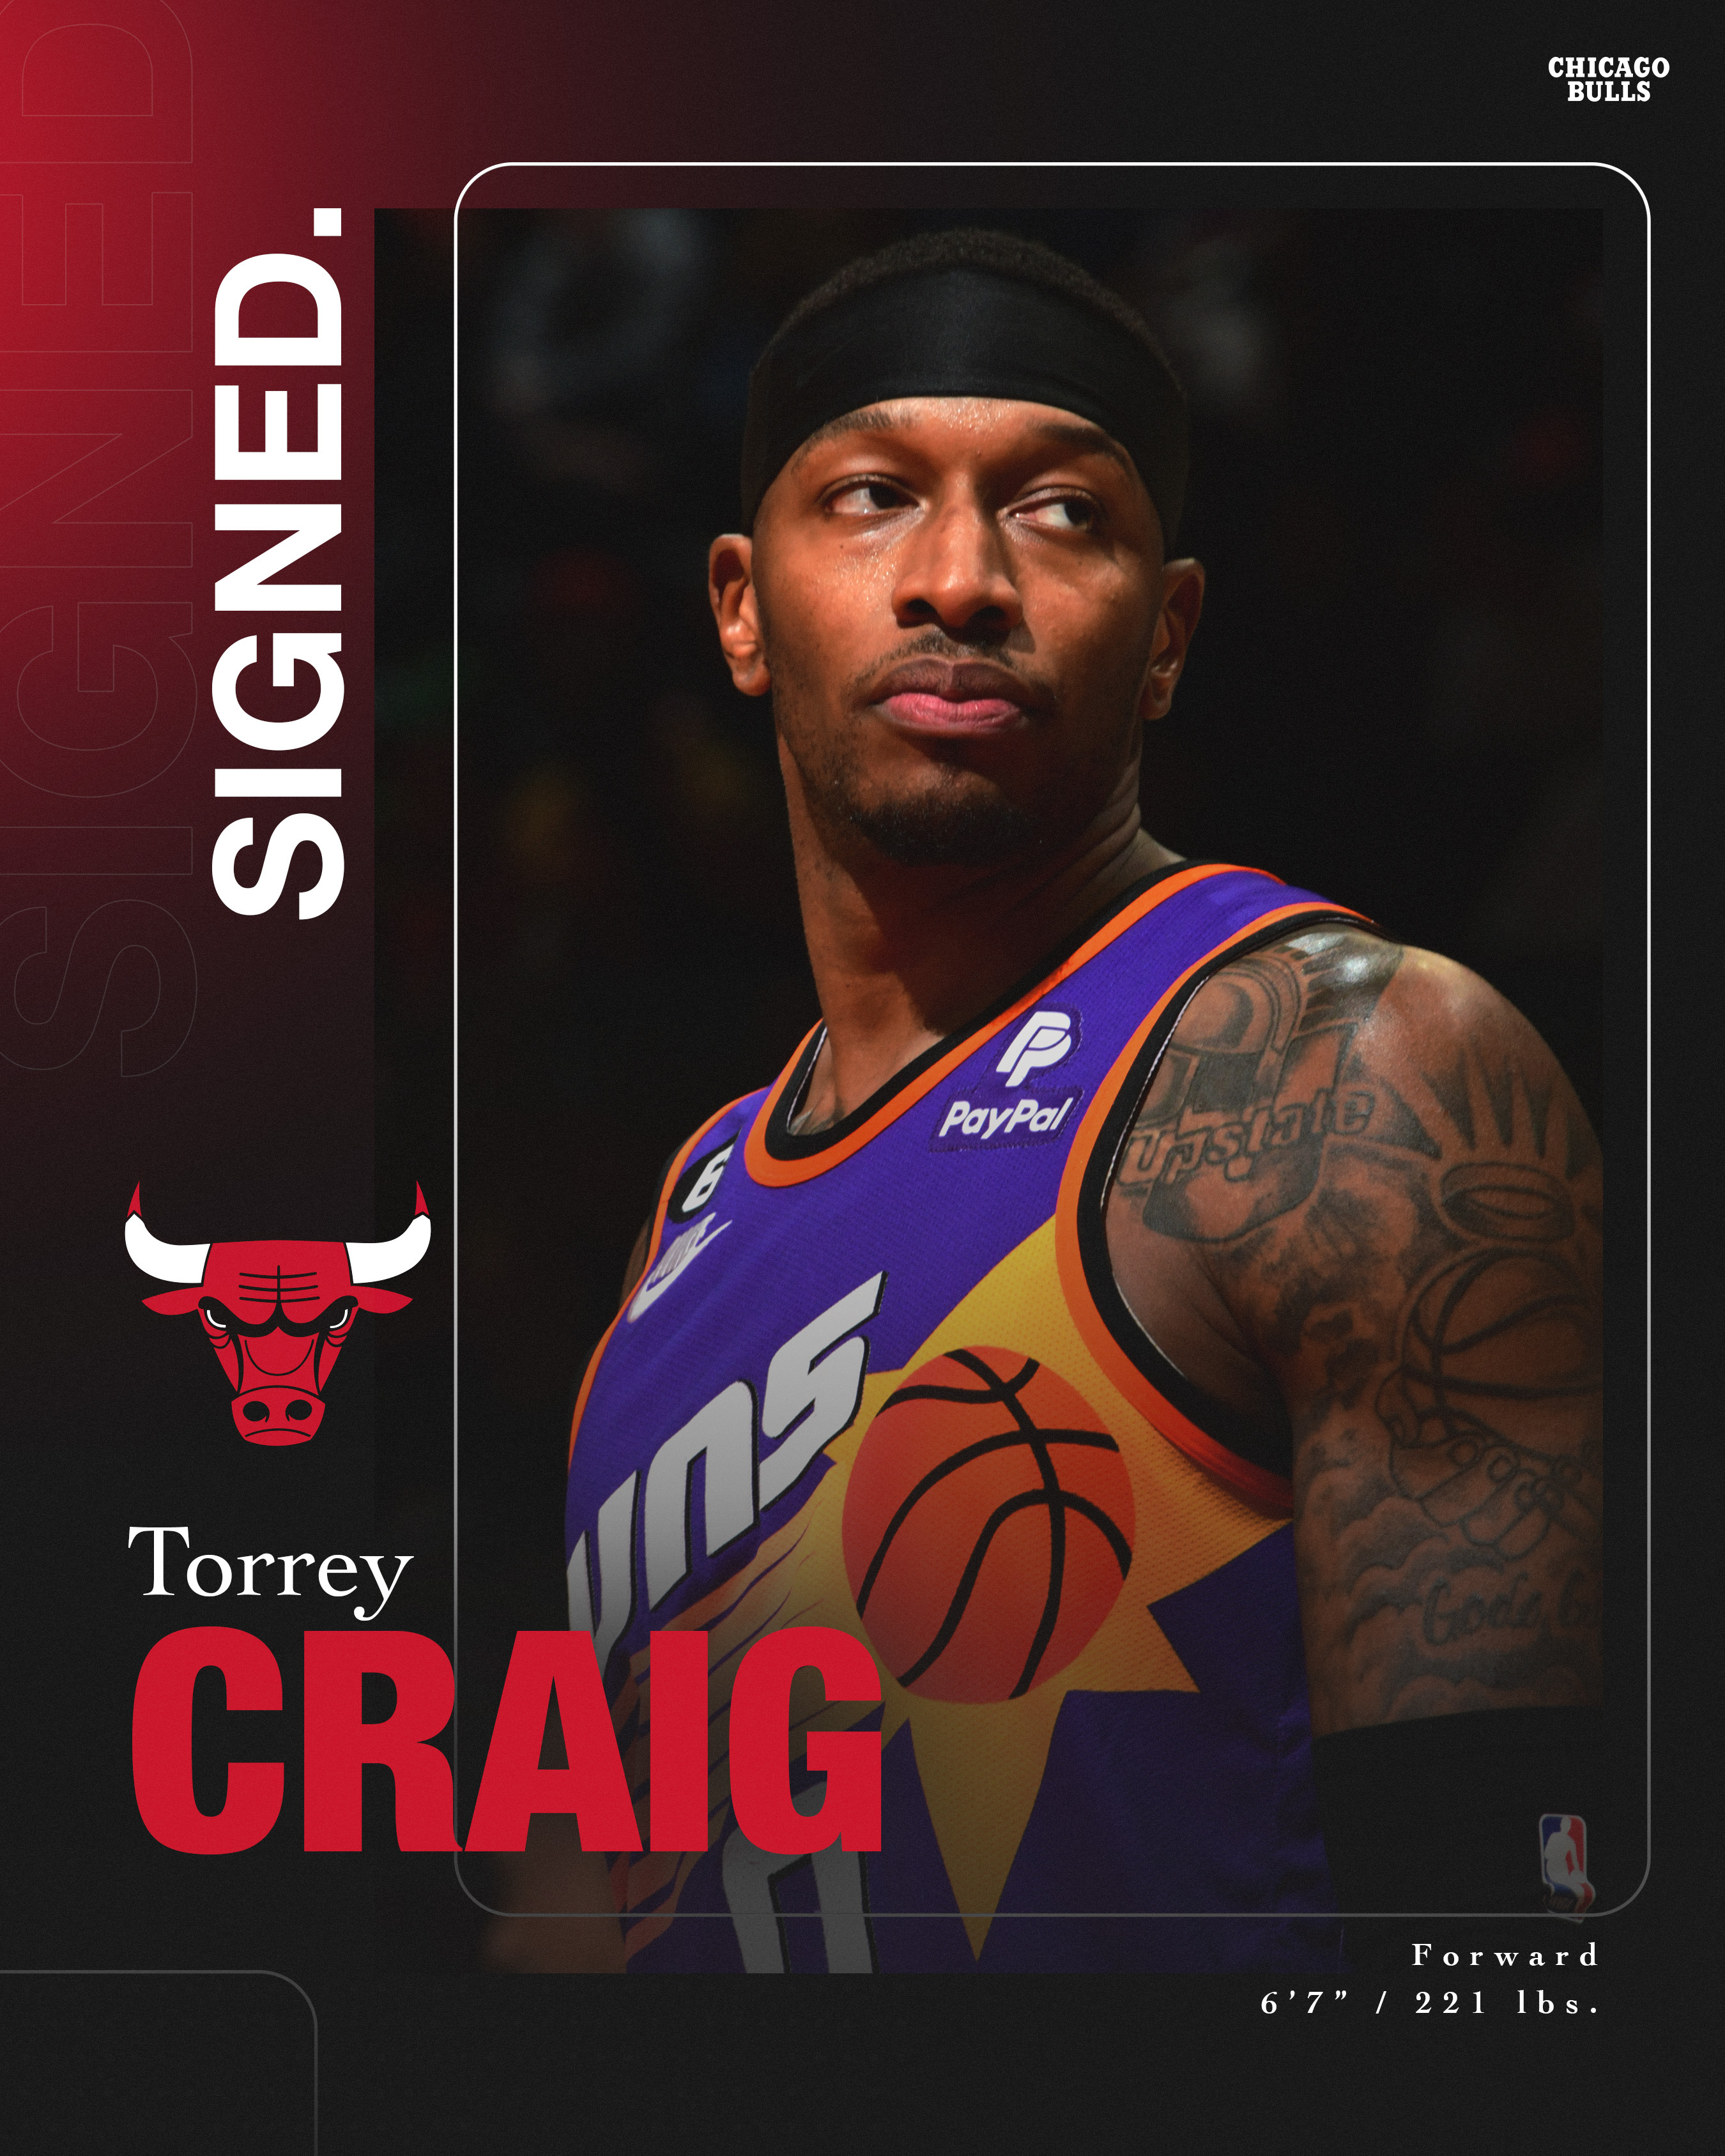 Bulls Sign Torrey Craig